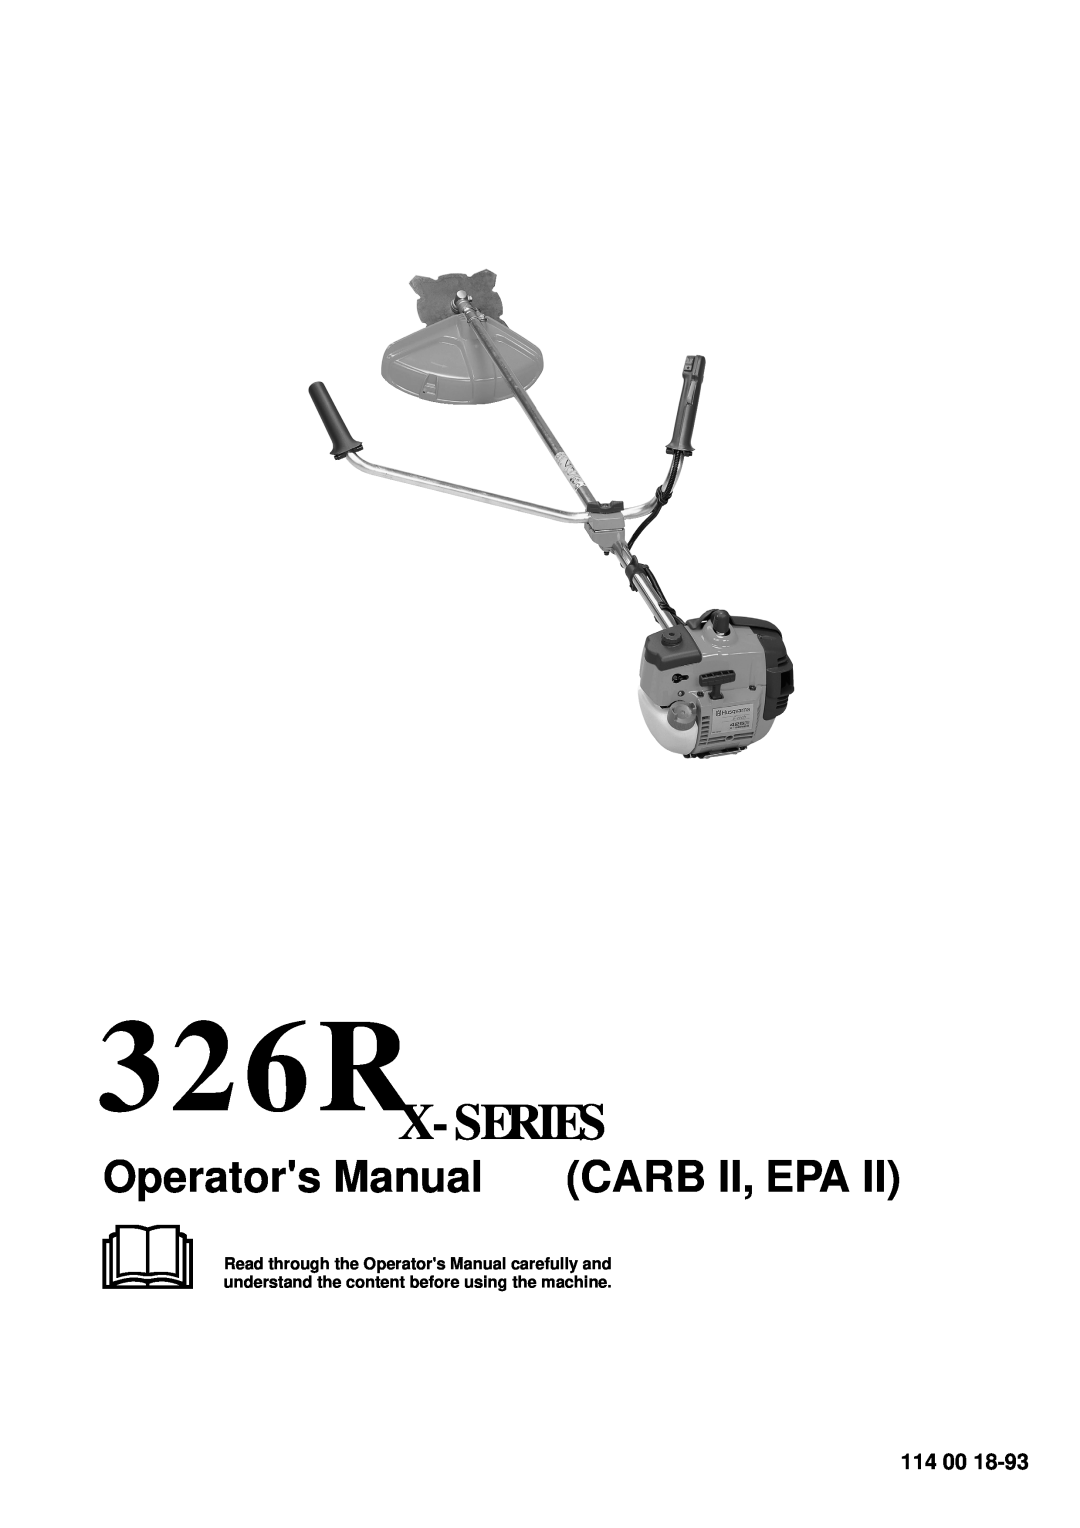 Husqvarna manual 326RX-SERIES, Operators Manual CARB II, EPA 